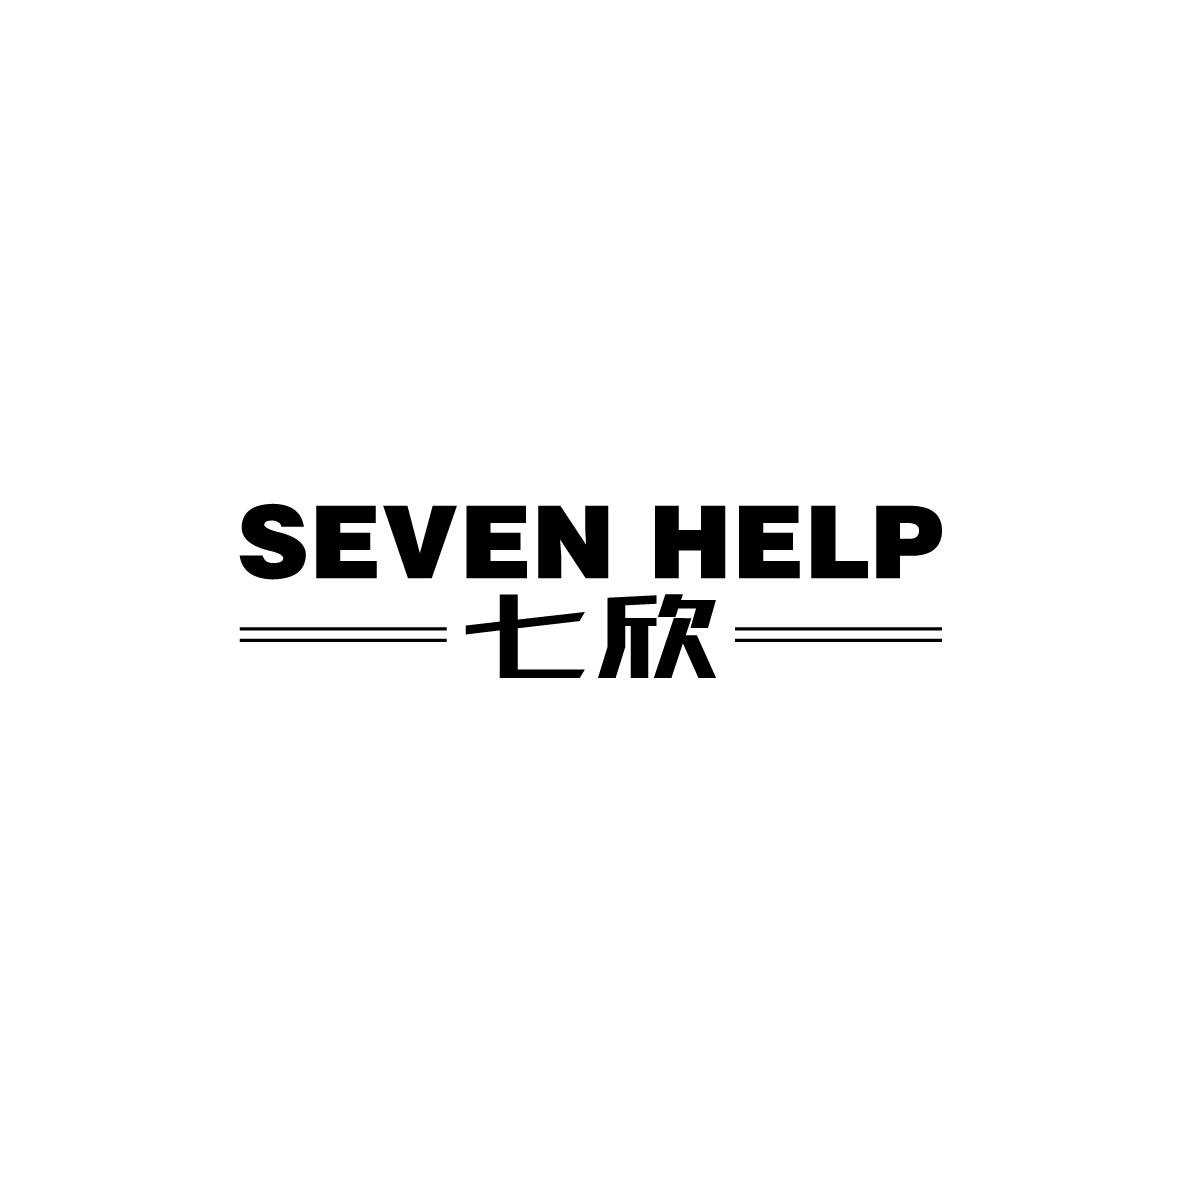  SEVEN HELP